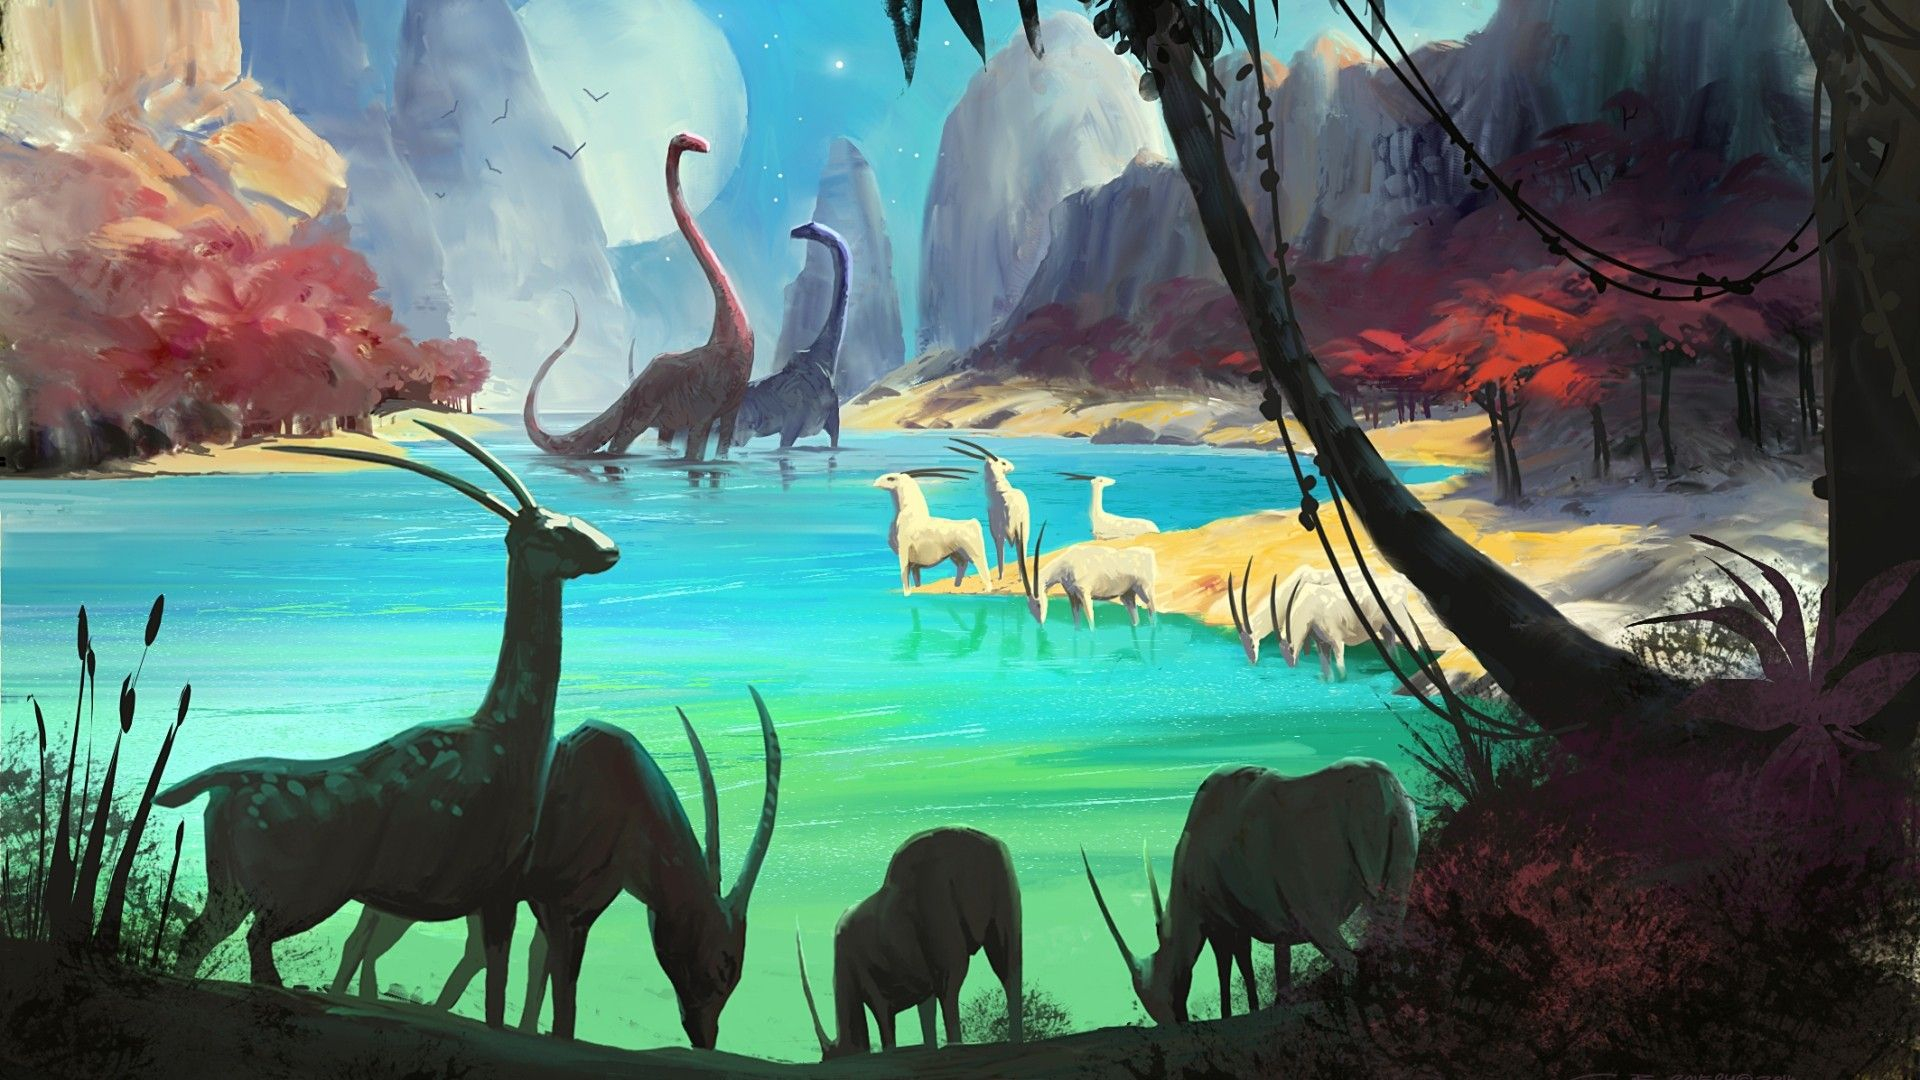 1920x1080 General digital art nature landscape prehistoric dinosaurs animals wildlife fantasy art lake trees forest lianas&acirc;&#128;&brvbar; | Sky art, No man's sky, Jungle painting